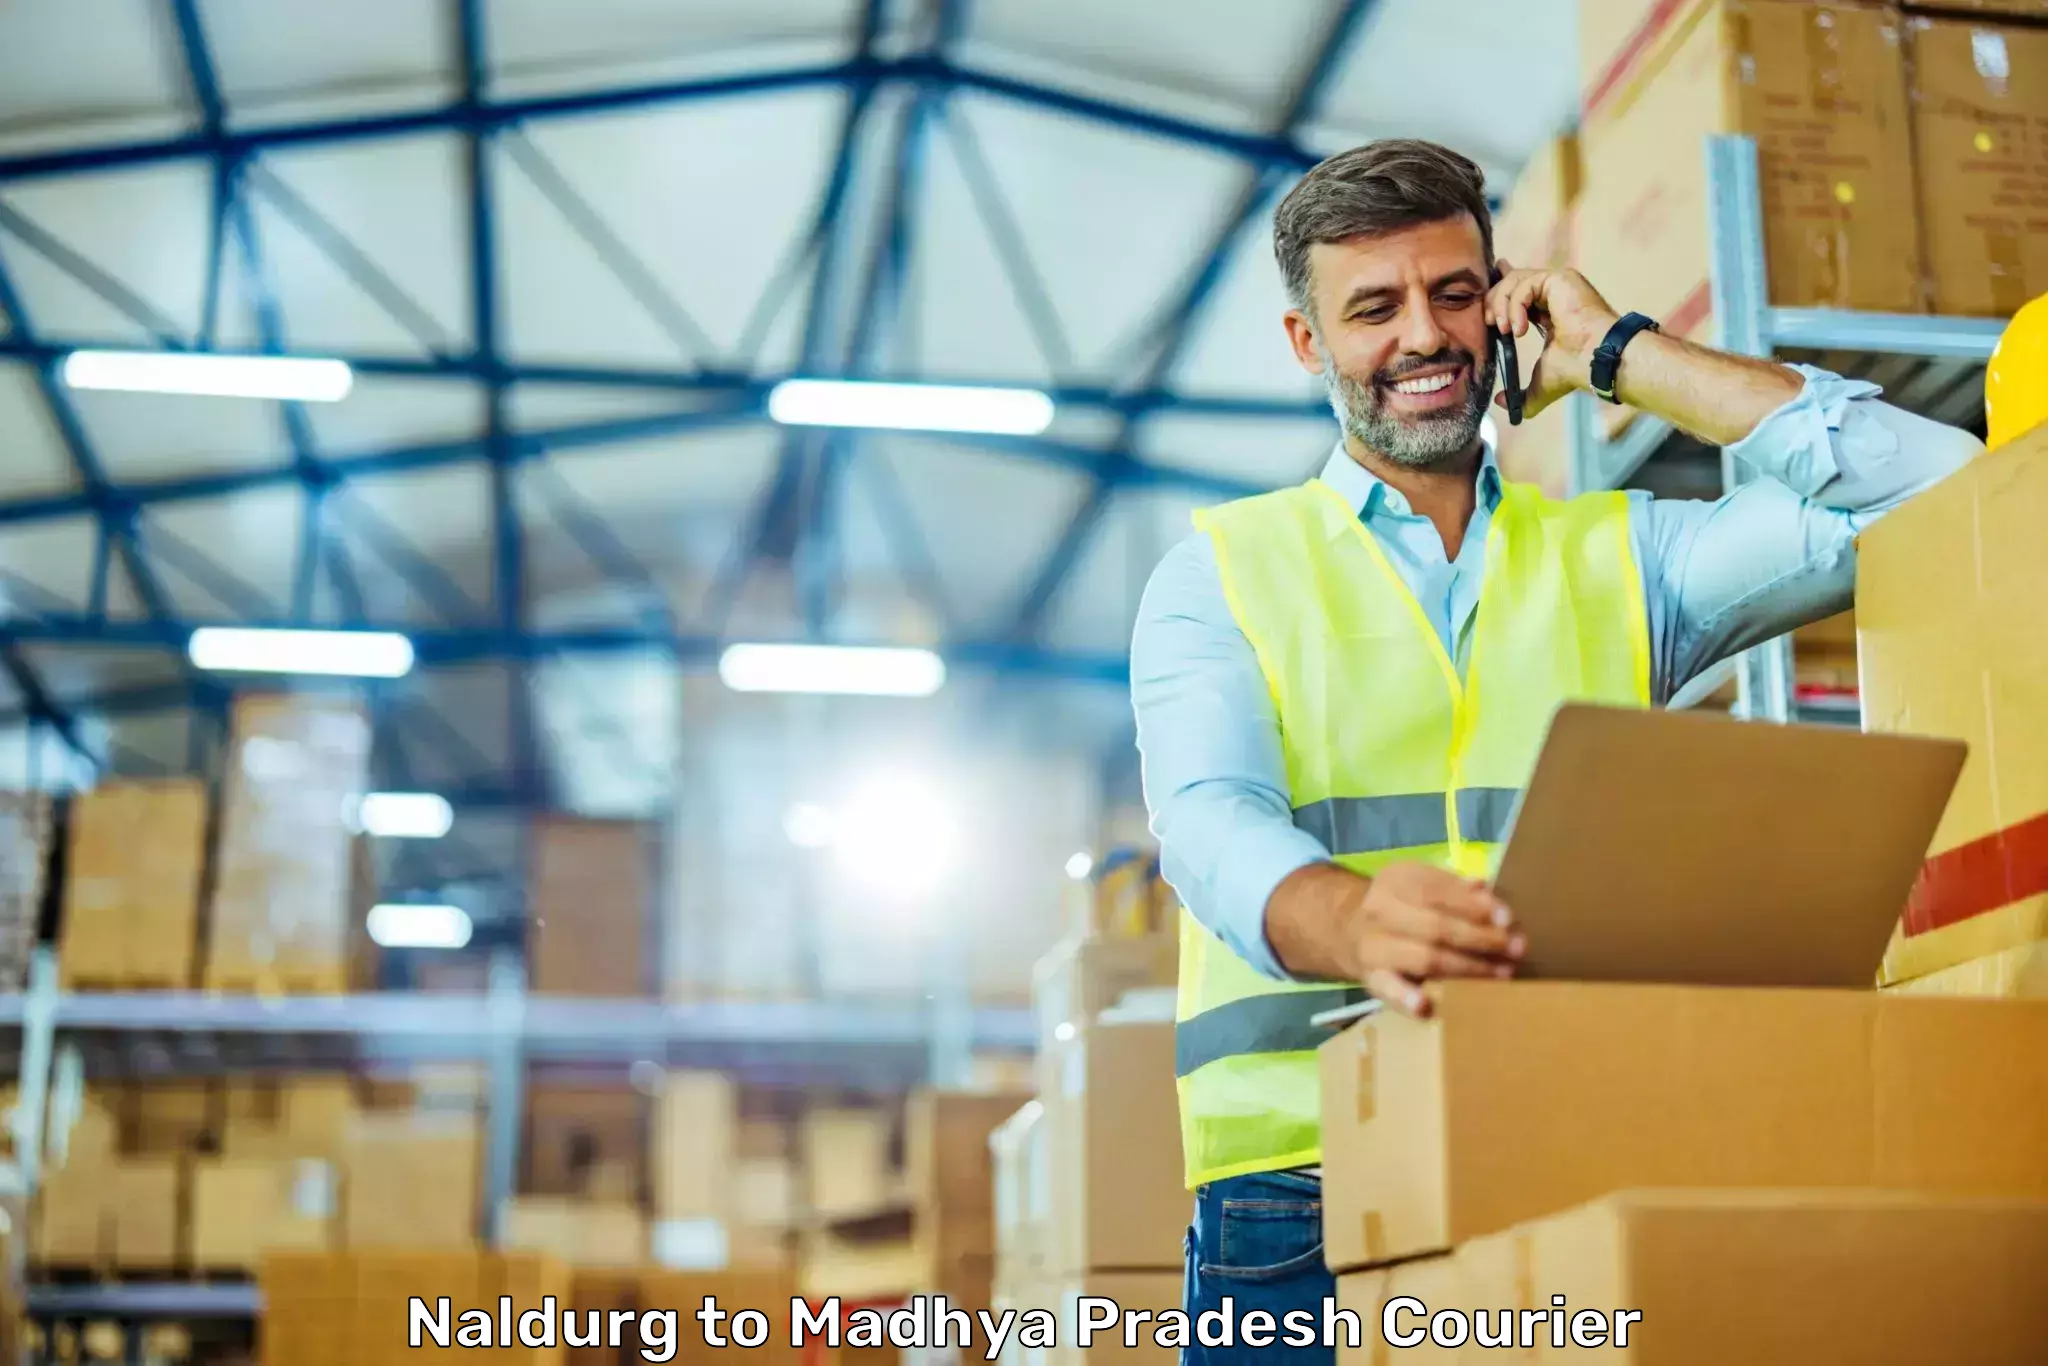 Professional courier handling Naldurg to Amanganj